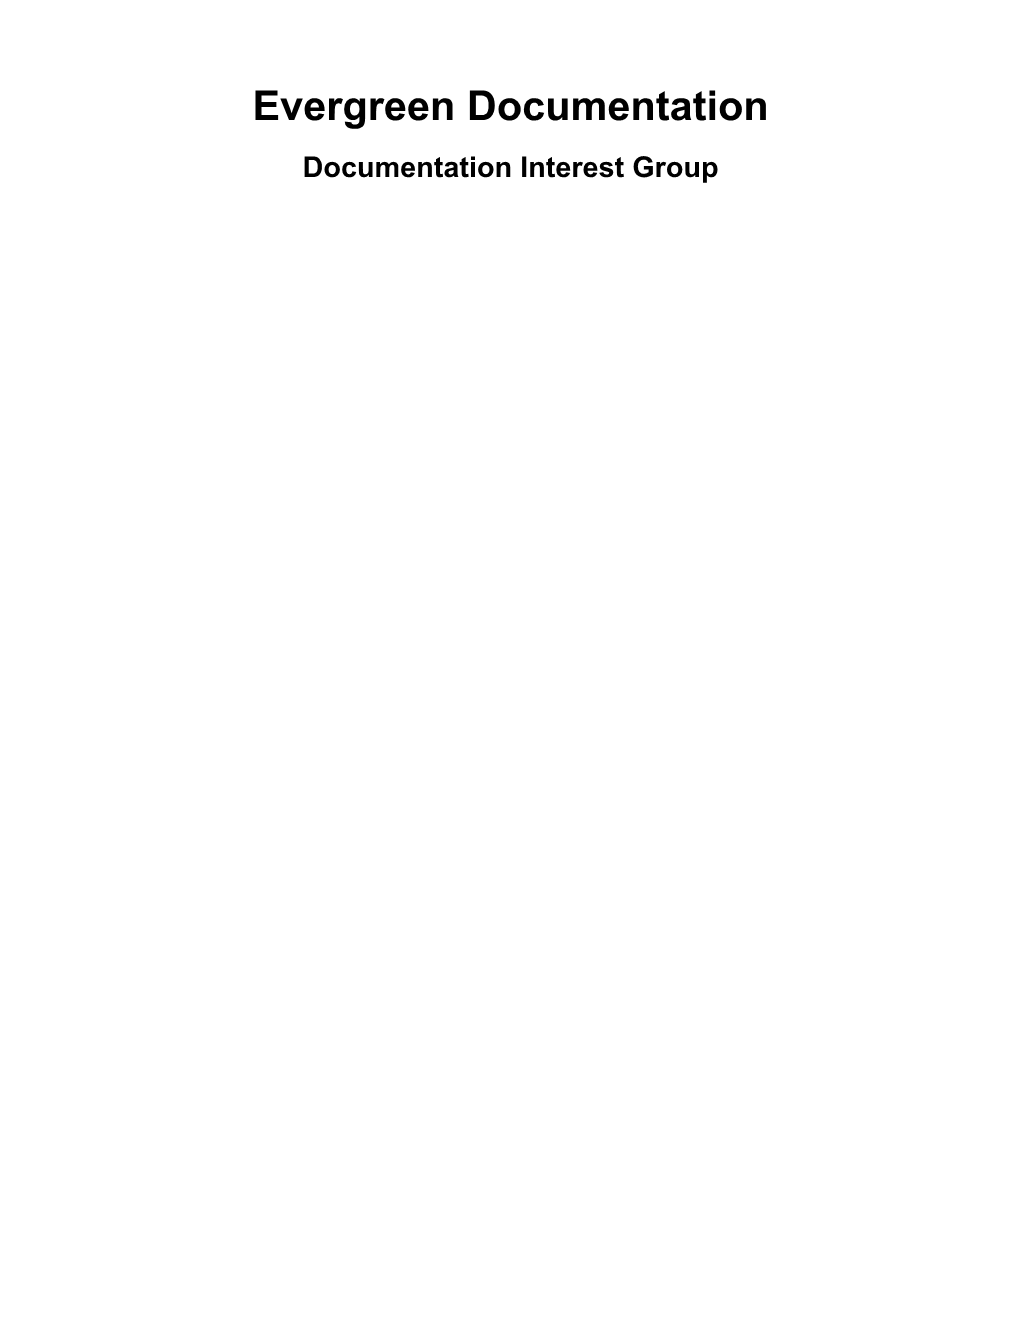 Evergreen Documentation Documentation Interest Group Evergreen Documentation Documentation Interest Group